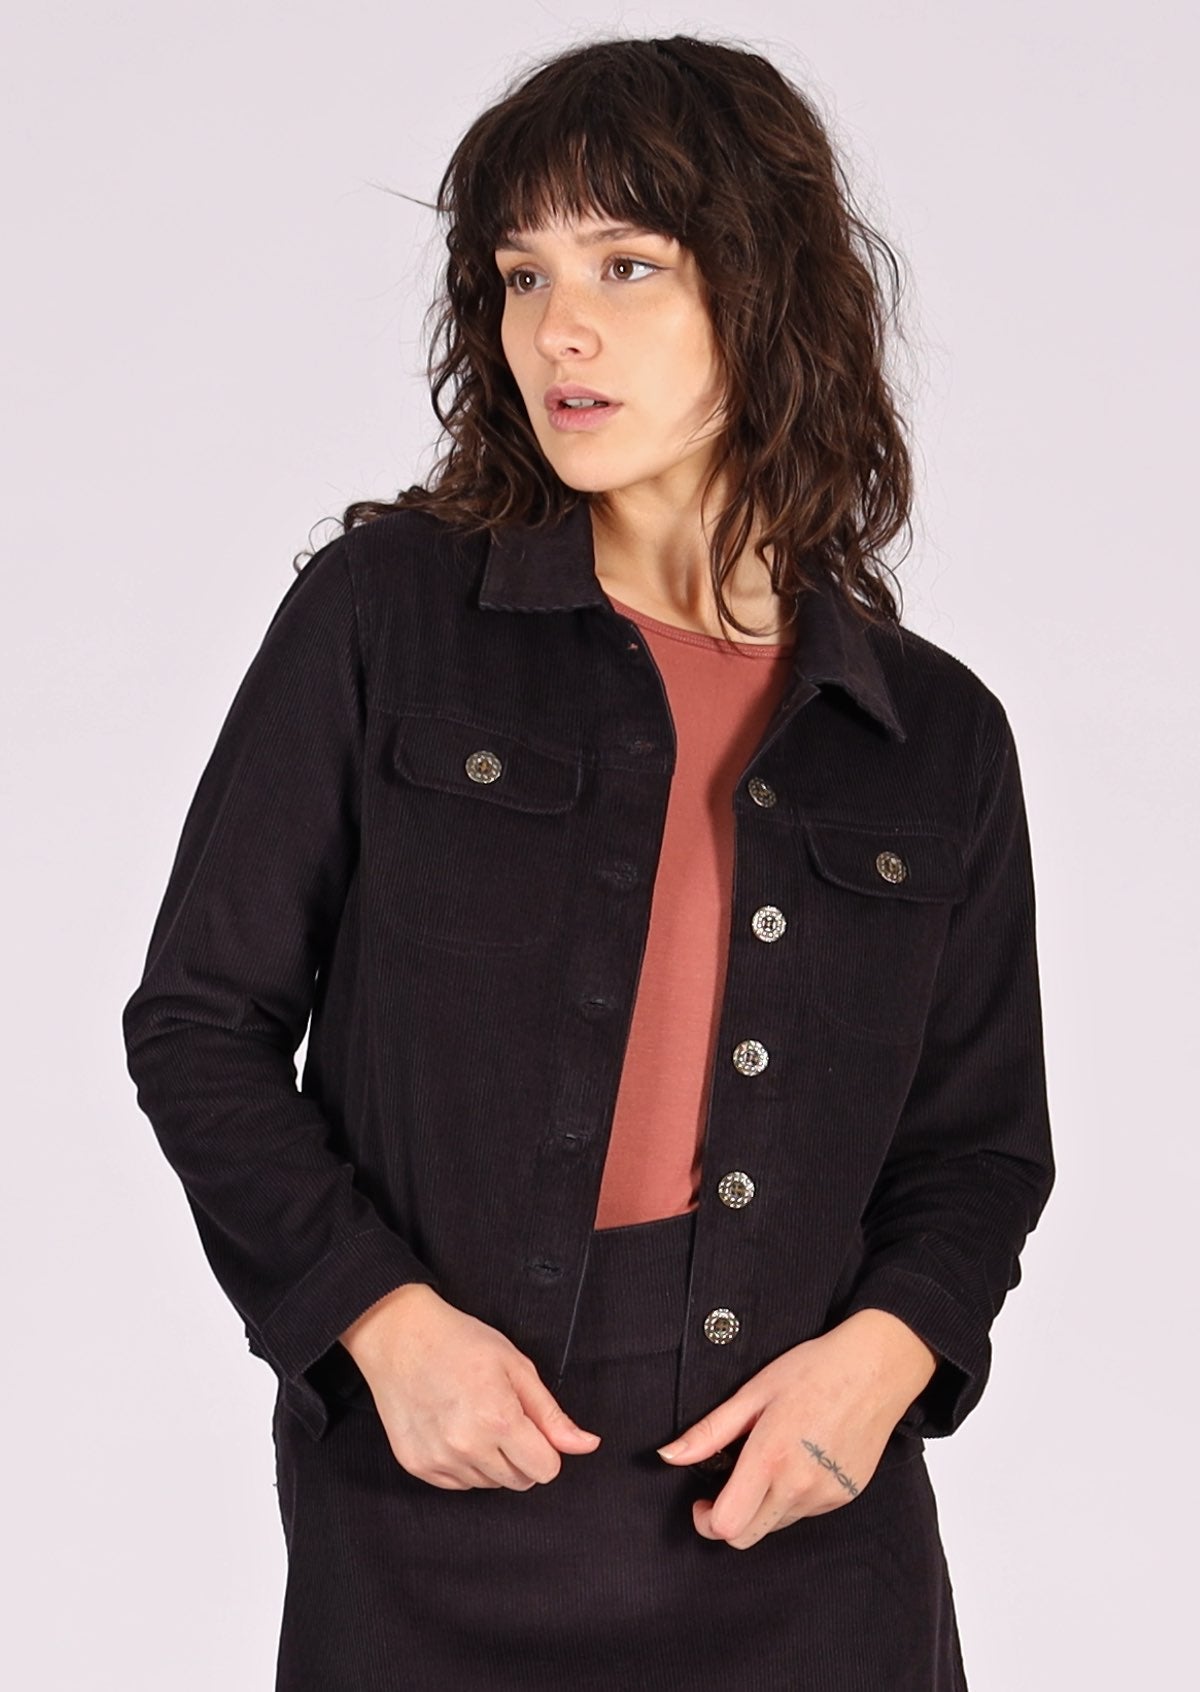 100% cotton corduroy jacket in dark grey with brass buttons